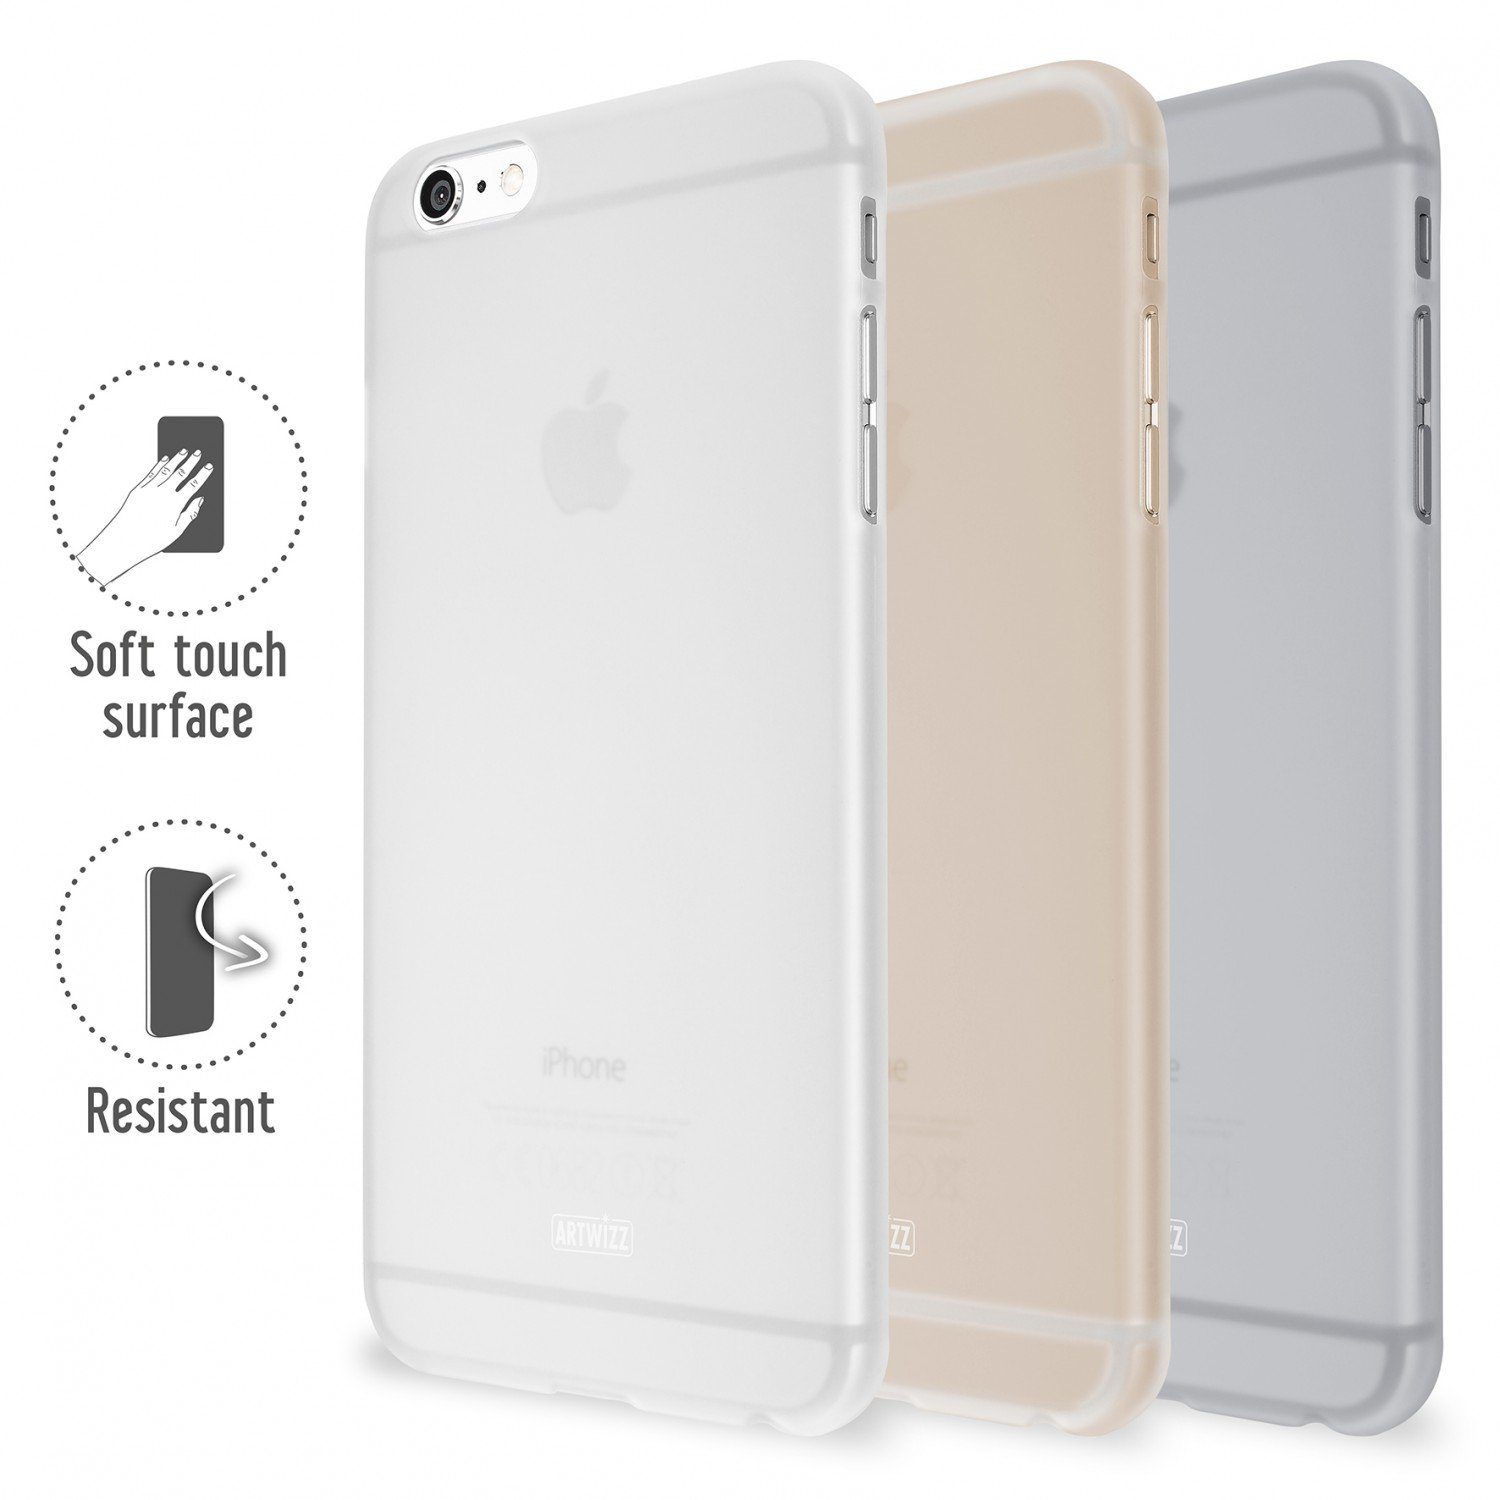 Artwizz Smartphone-Hülle Rubber Clip for iPhone 6/6s Plus, translucent